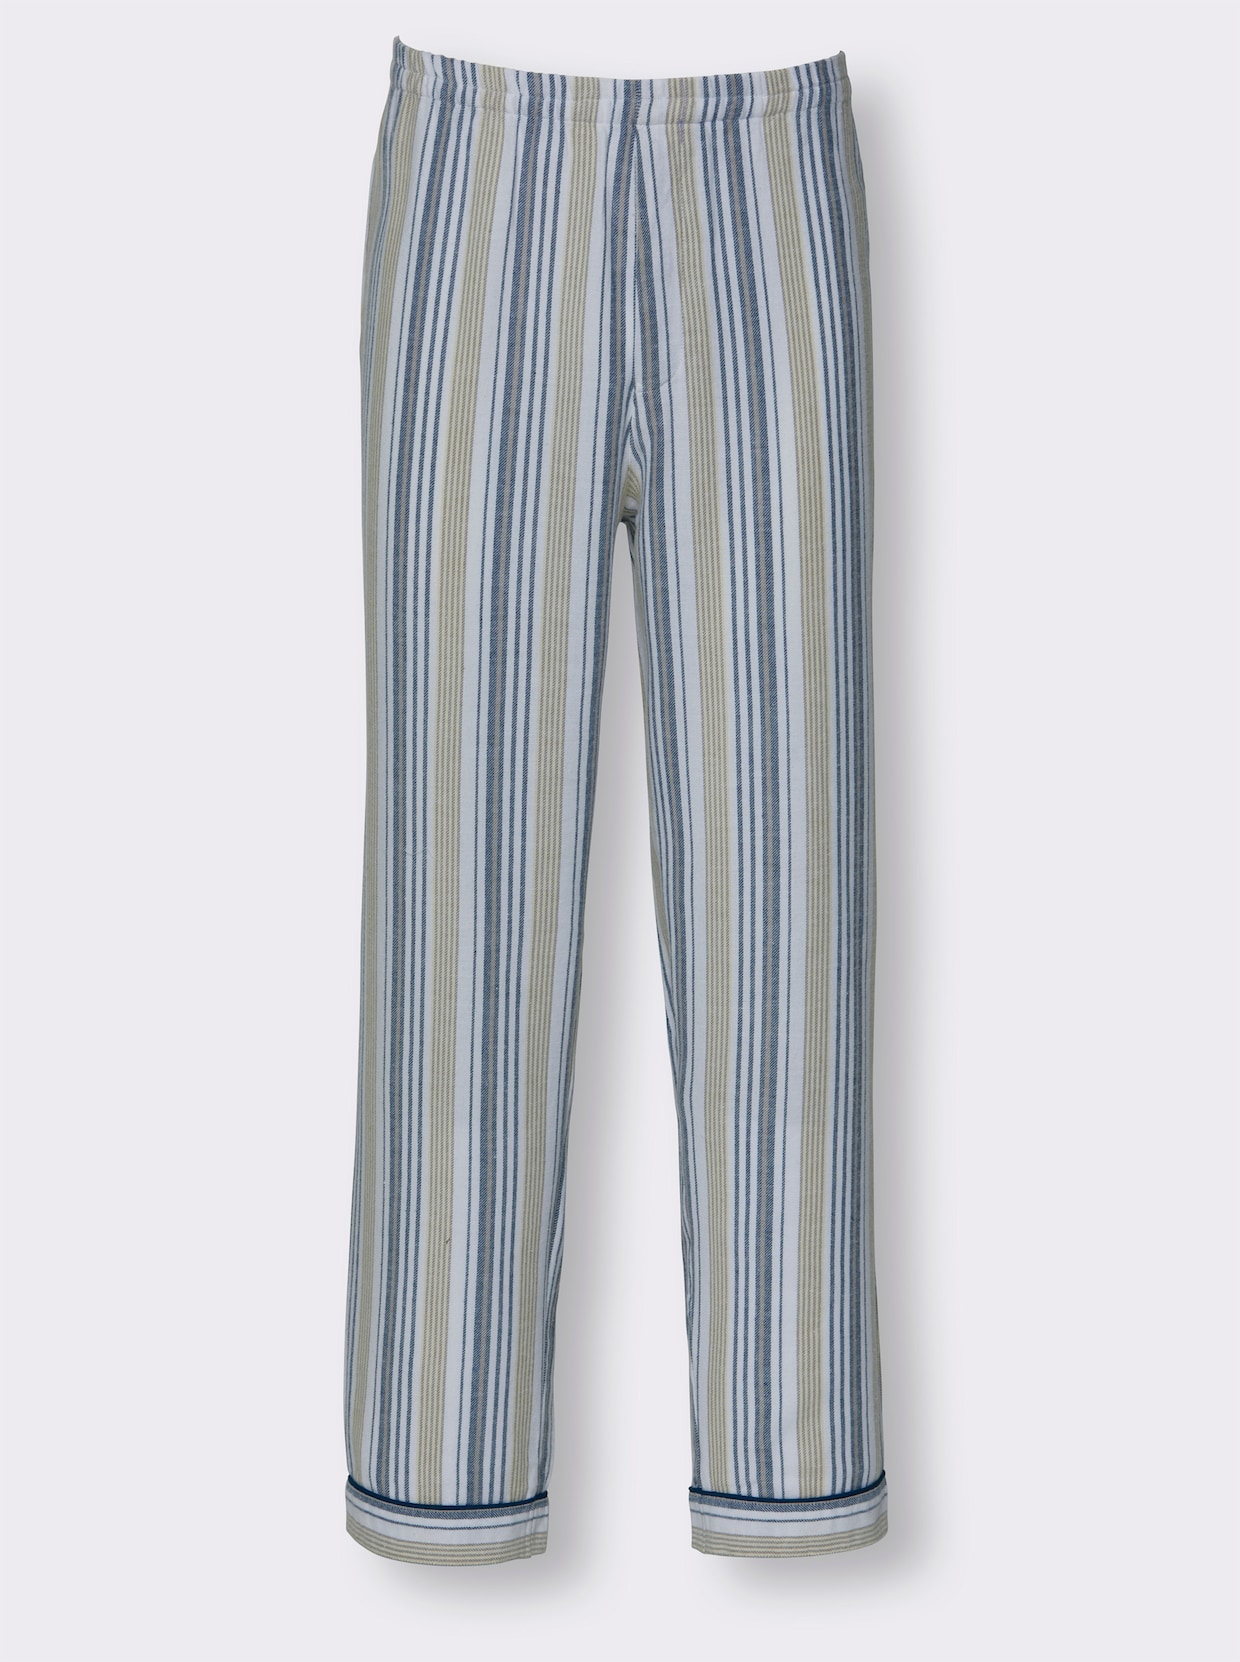 KINGsCLUB Pyjama - blauw gestreept